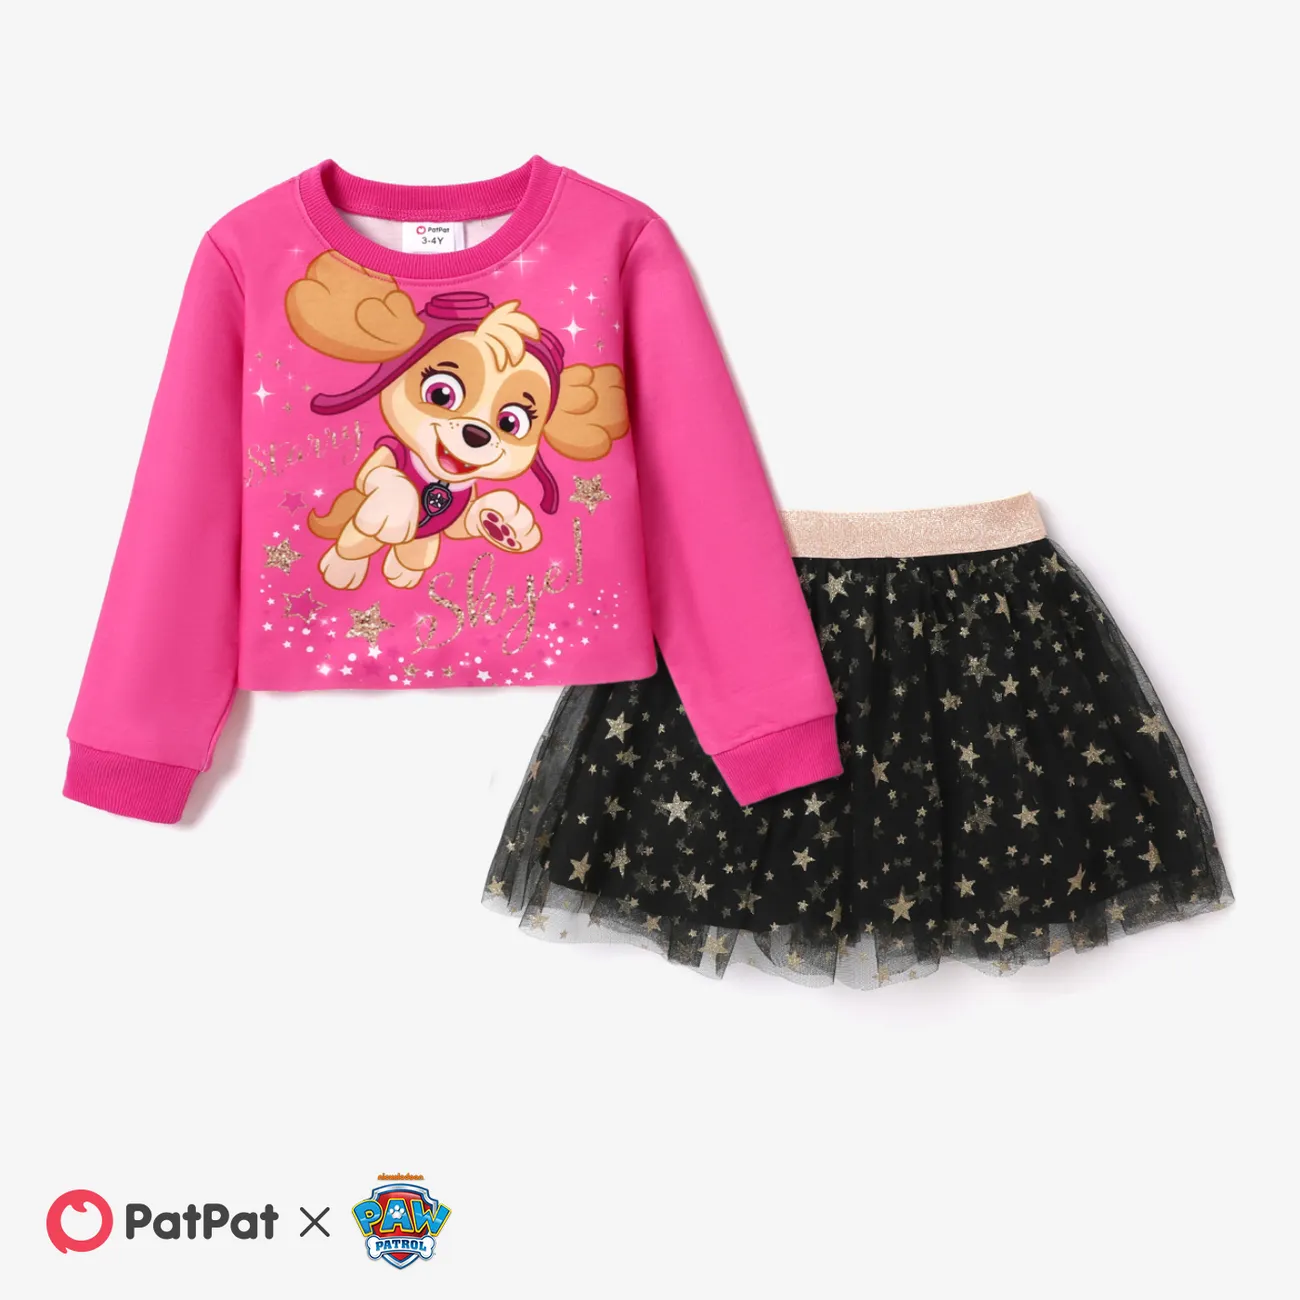 PAW Patrol Toddler Girl 2pcs Character Print Long-sleeve Top and Mesh Skirt Set Hot Pink big image 1